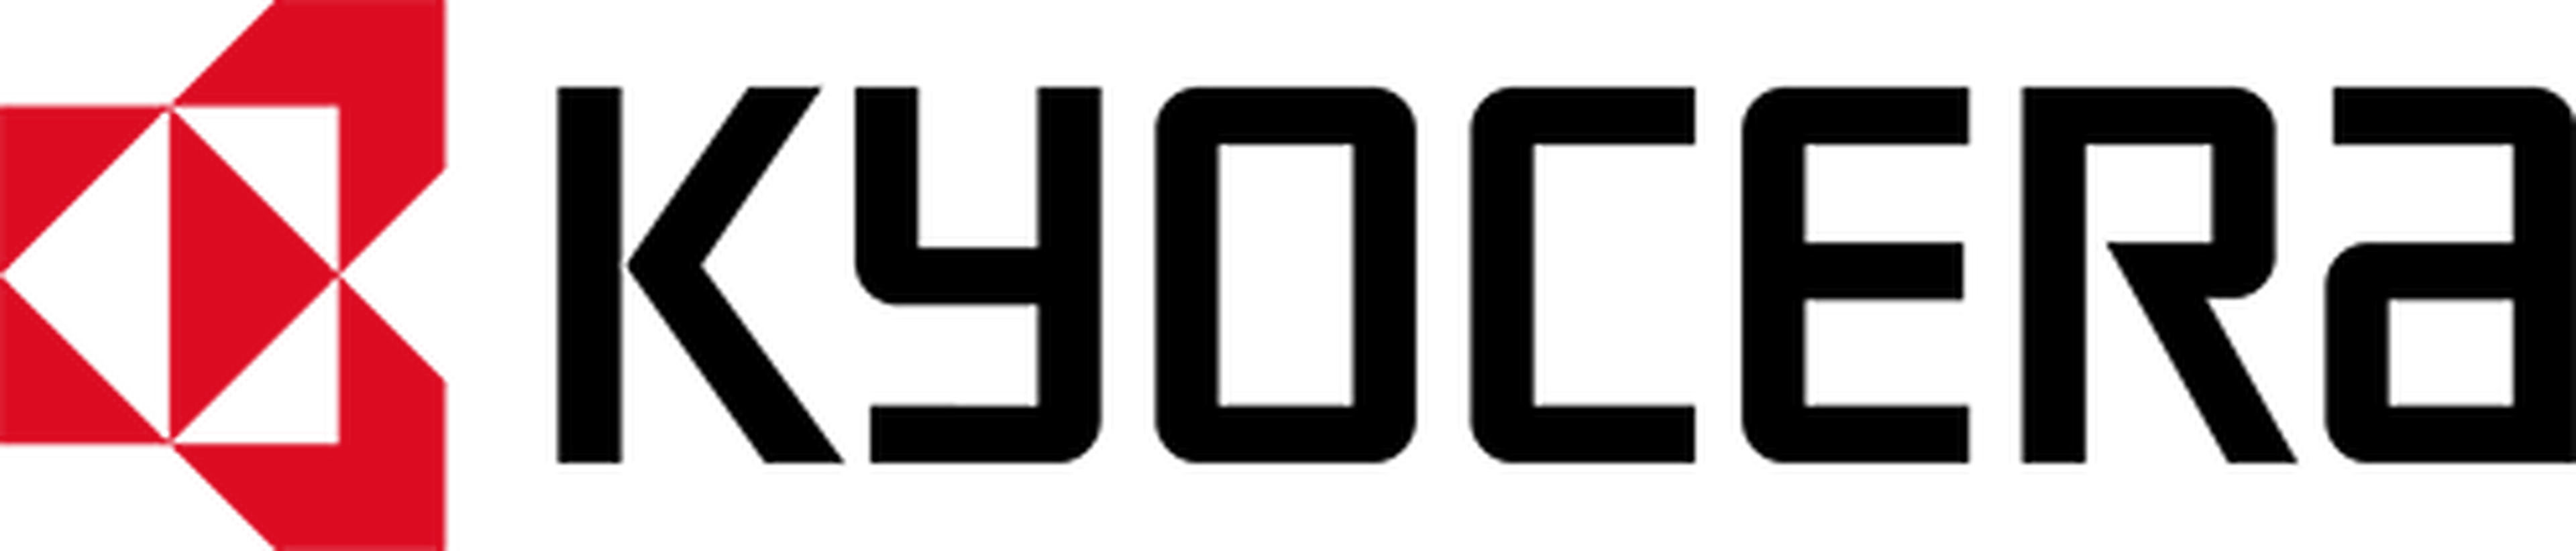 Kyocera logotype